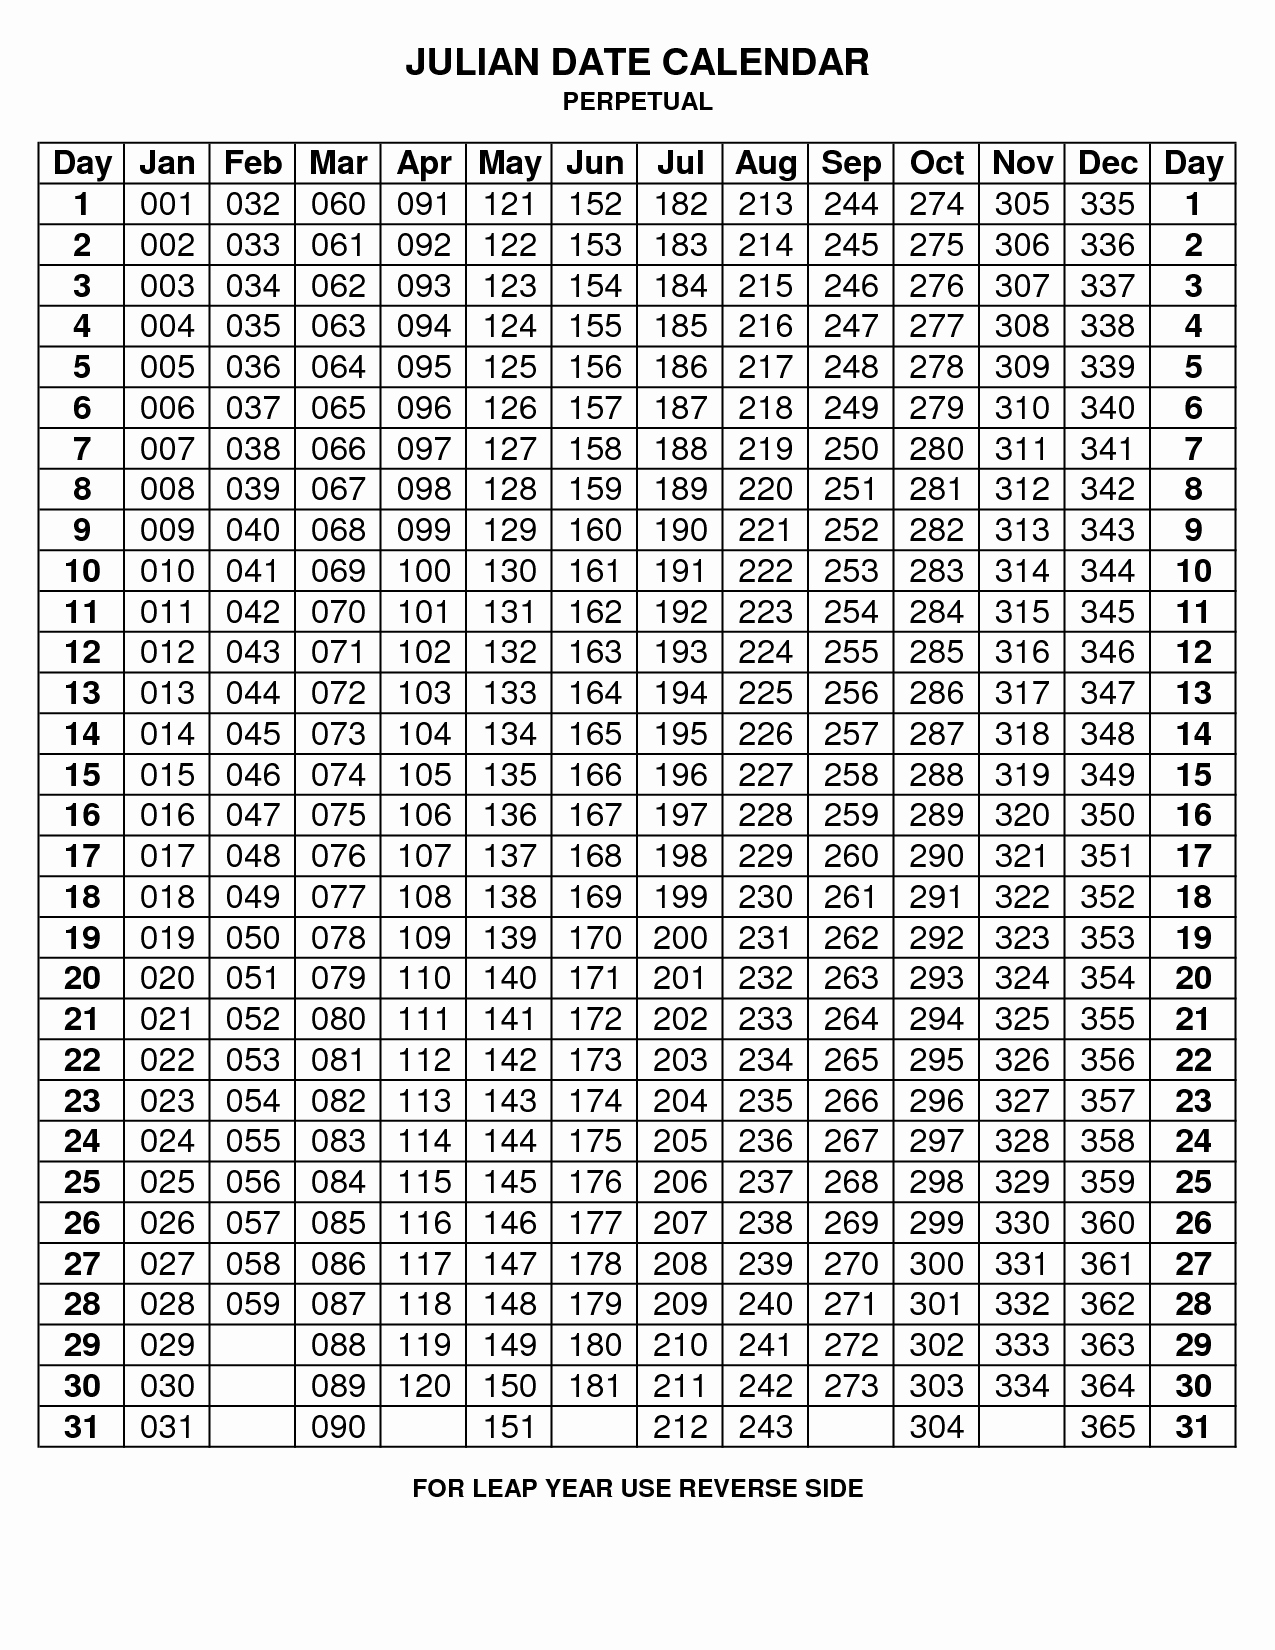 Depo Provera Perpetual Calendar To Print - Calendar  Depo Schedule For 2021